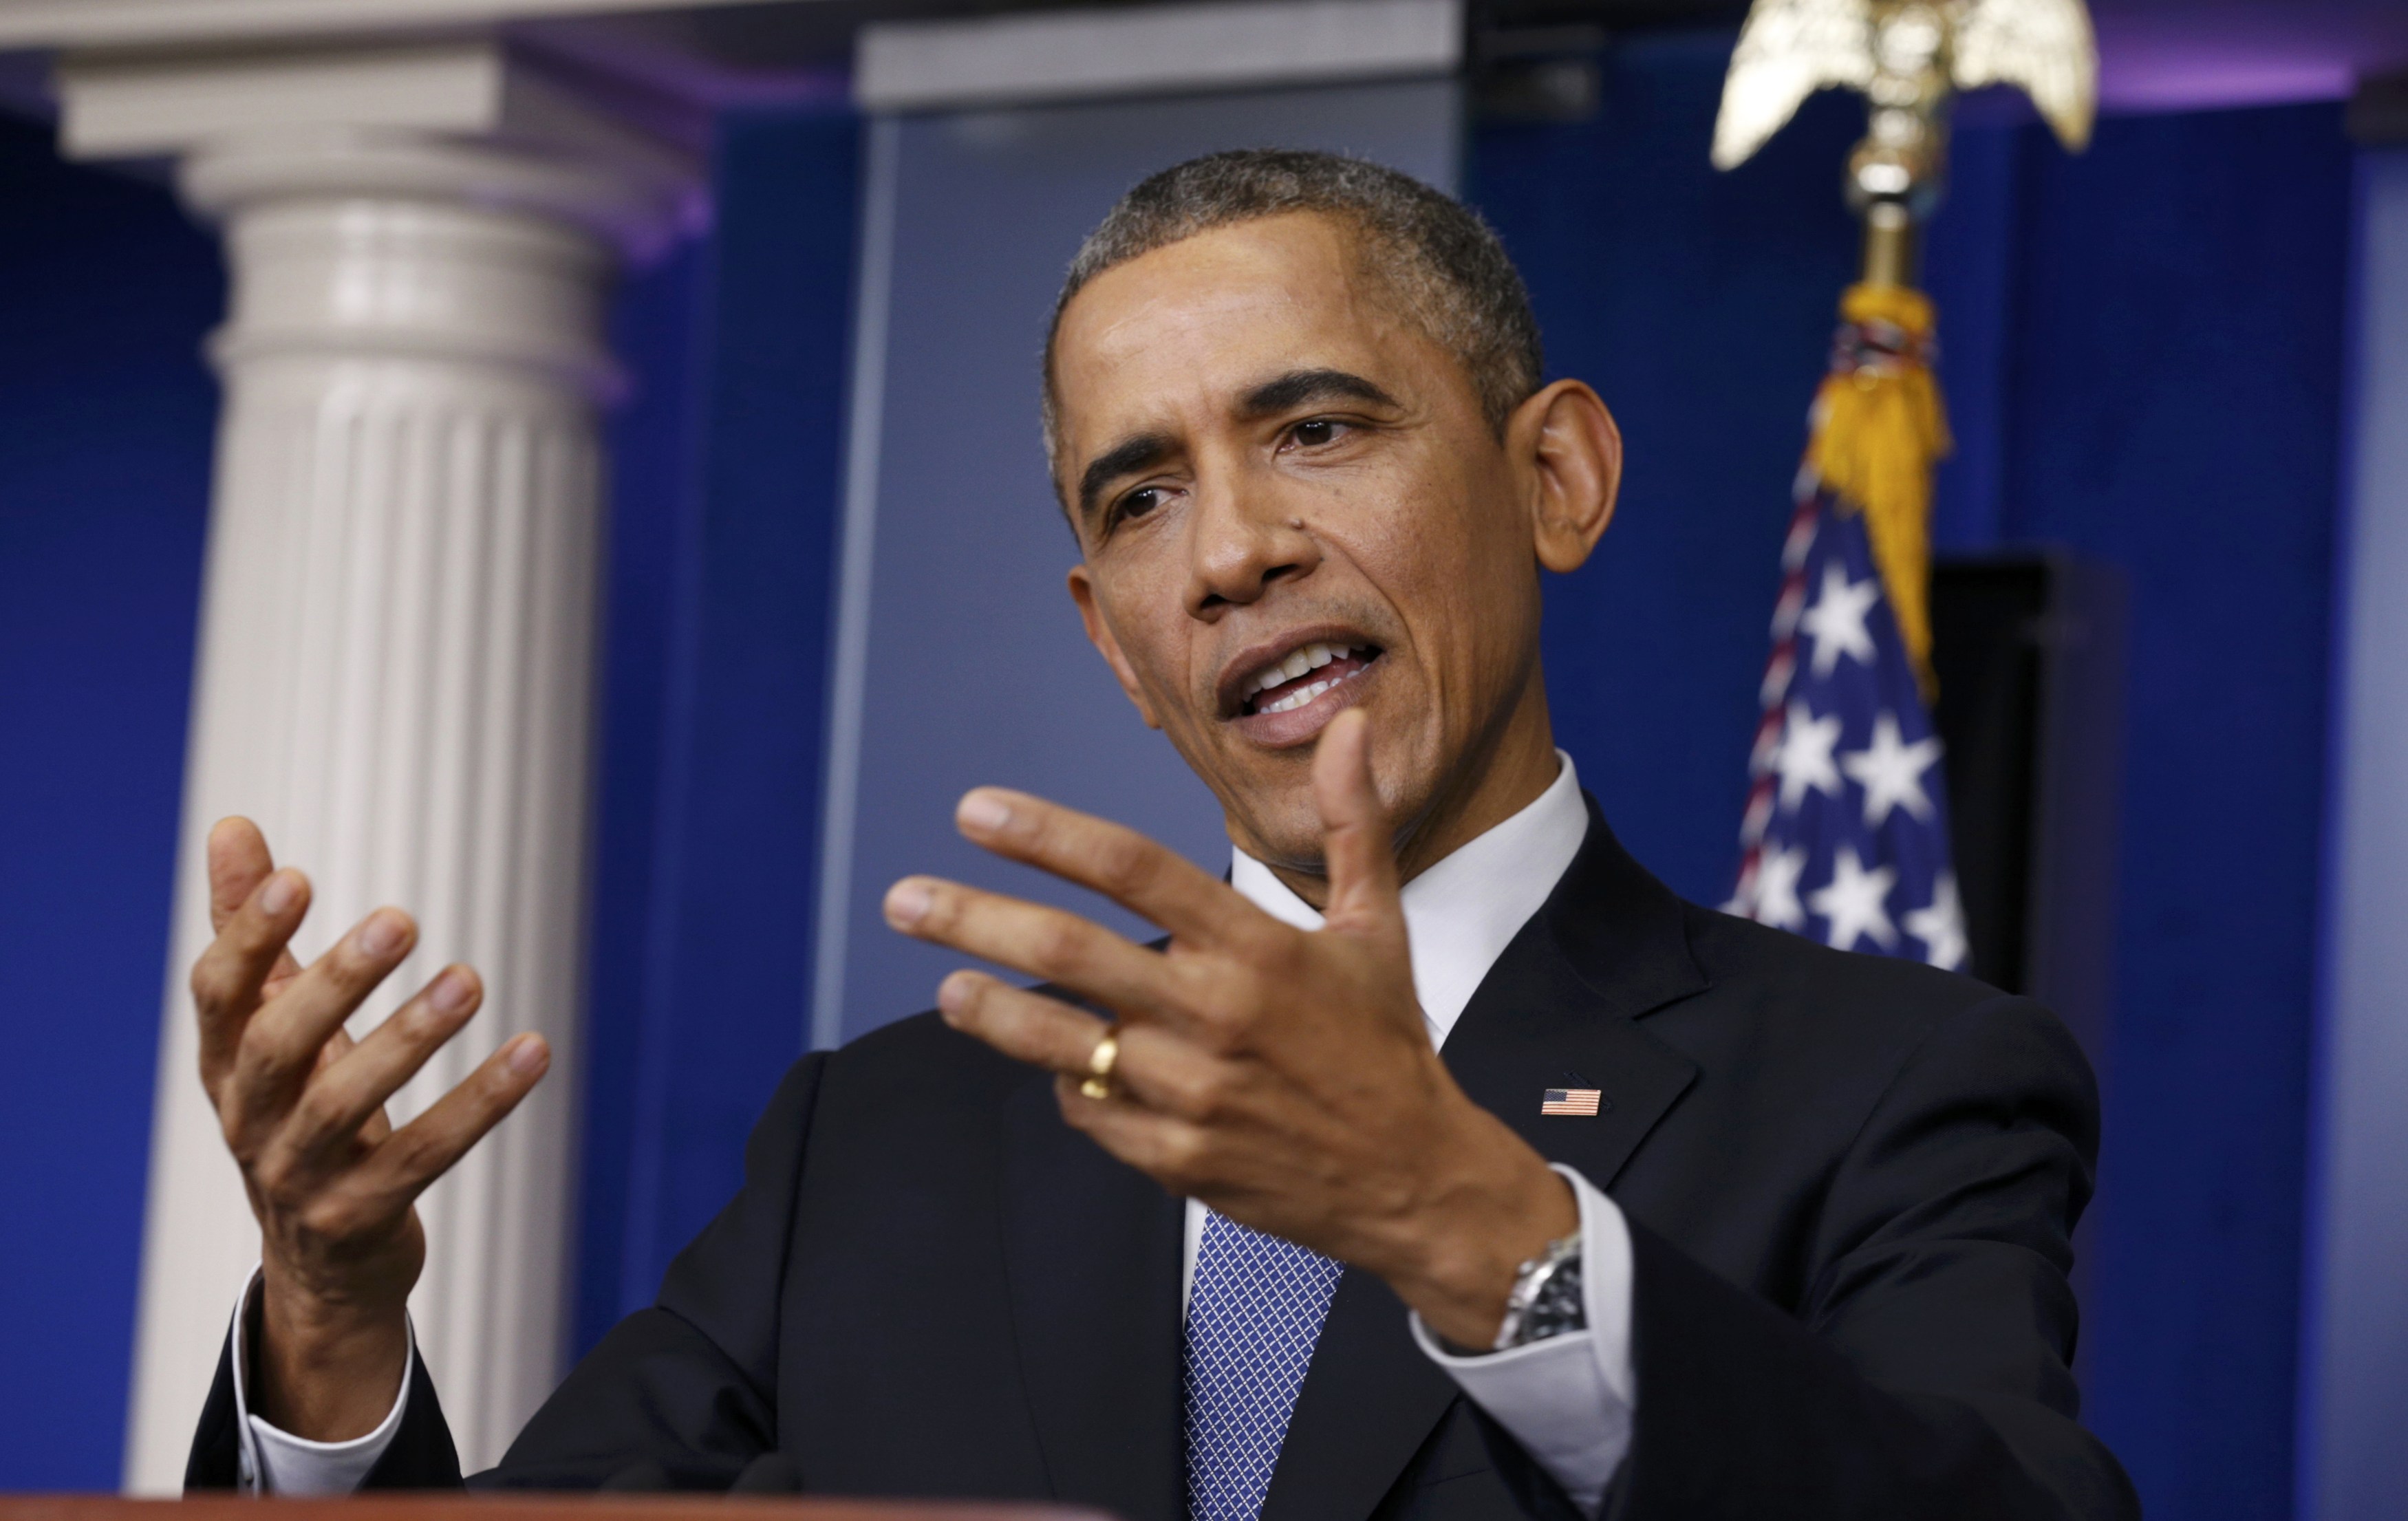 Obama mocks absurd plot twist of cyberattack on Sony